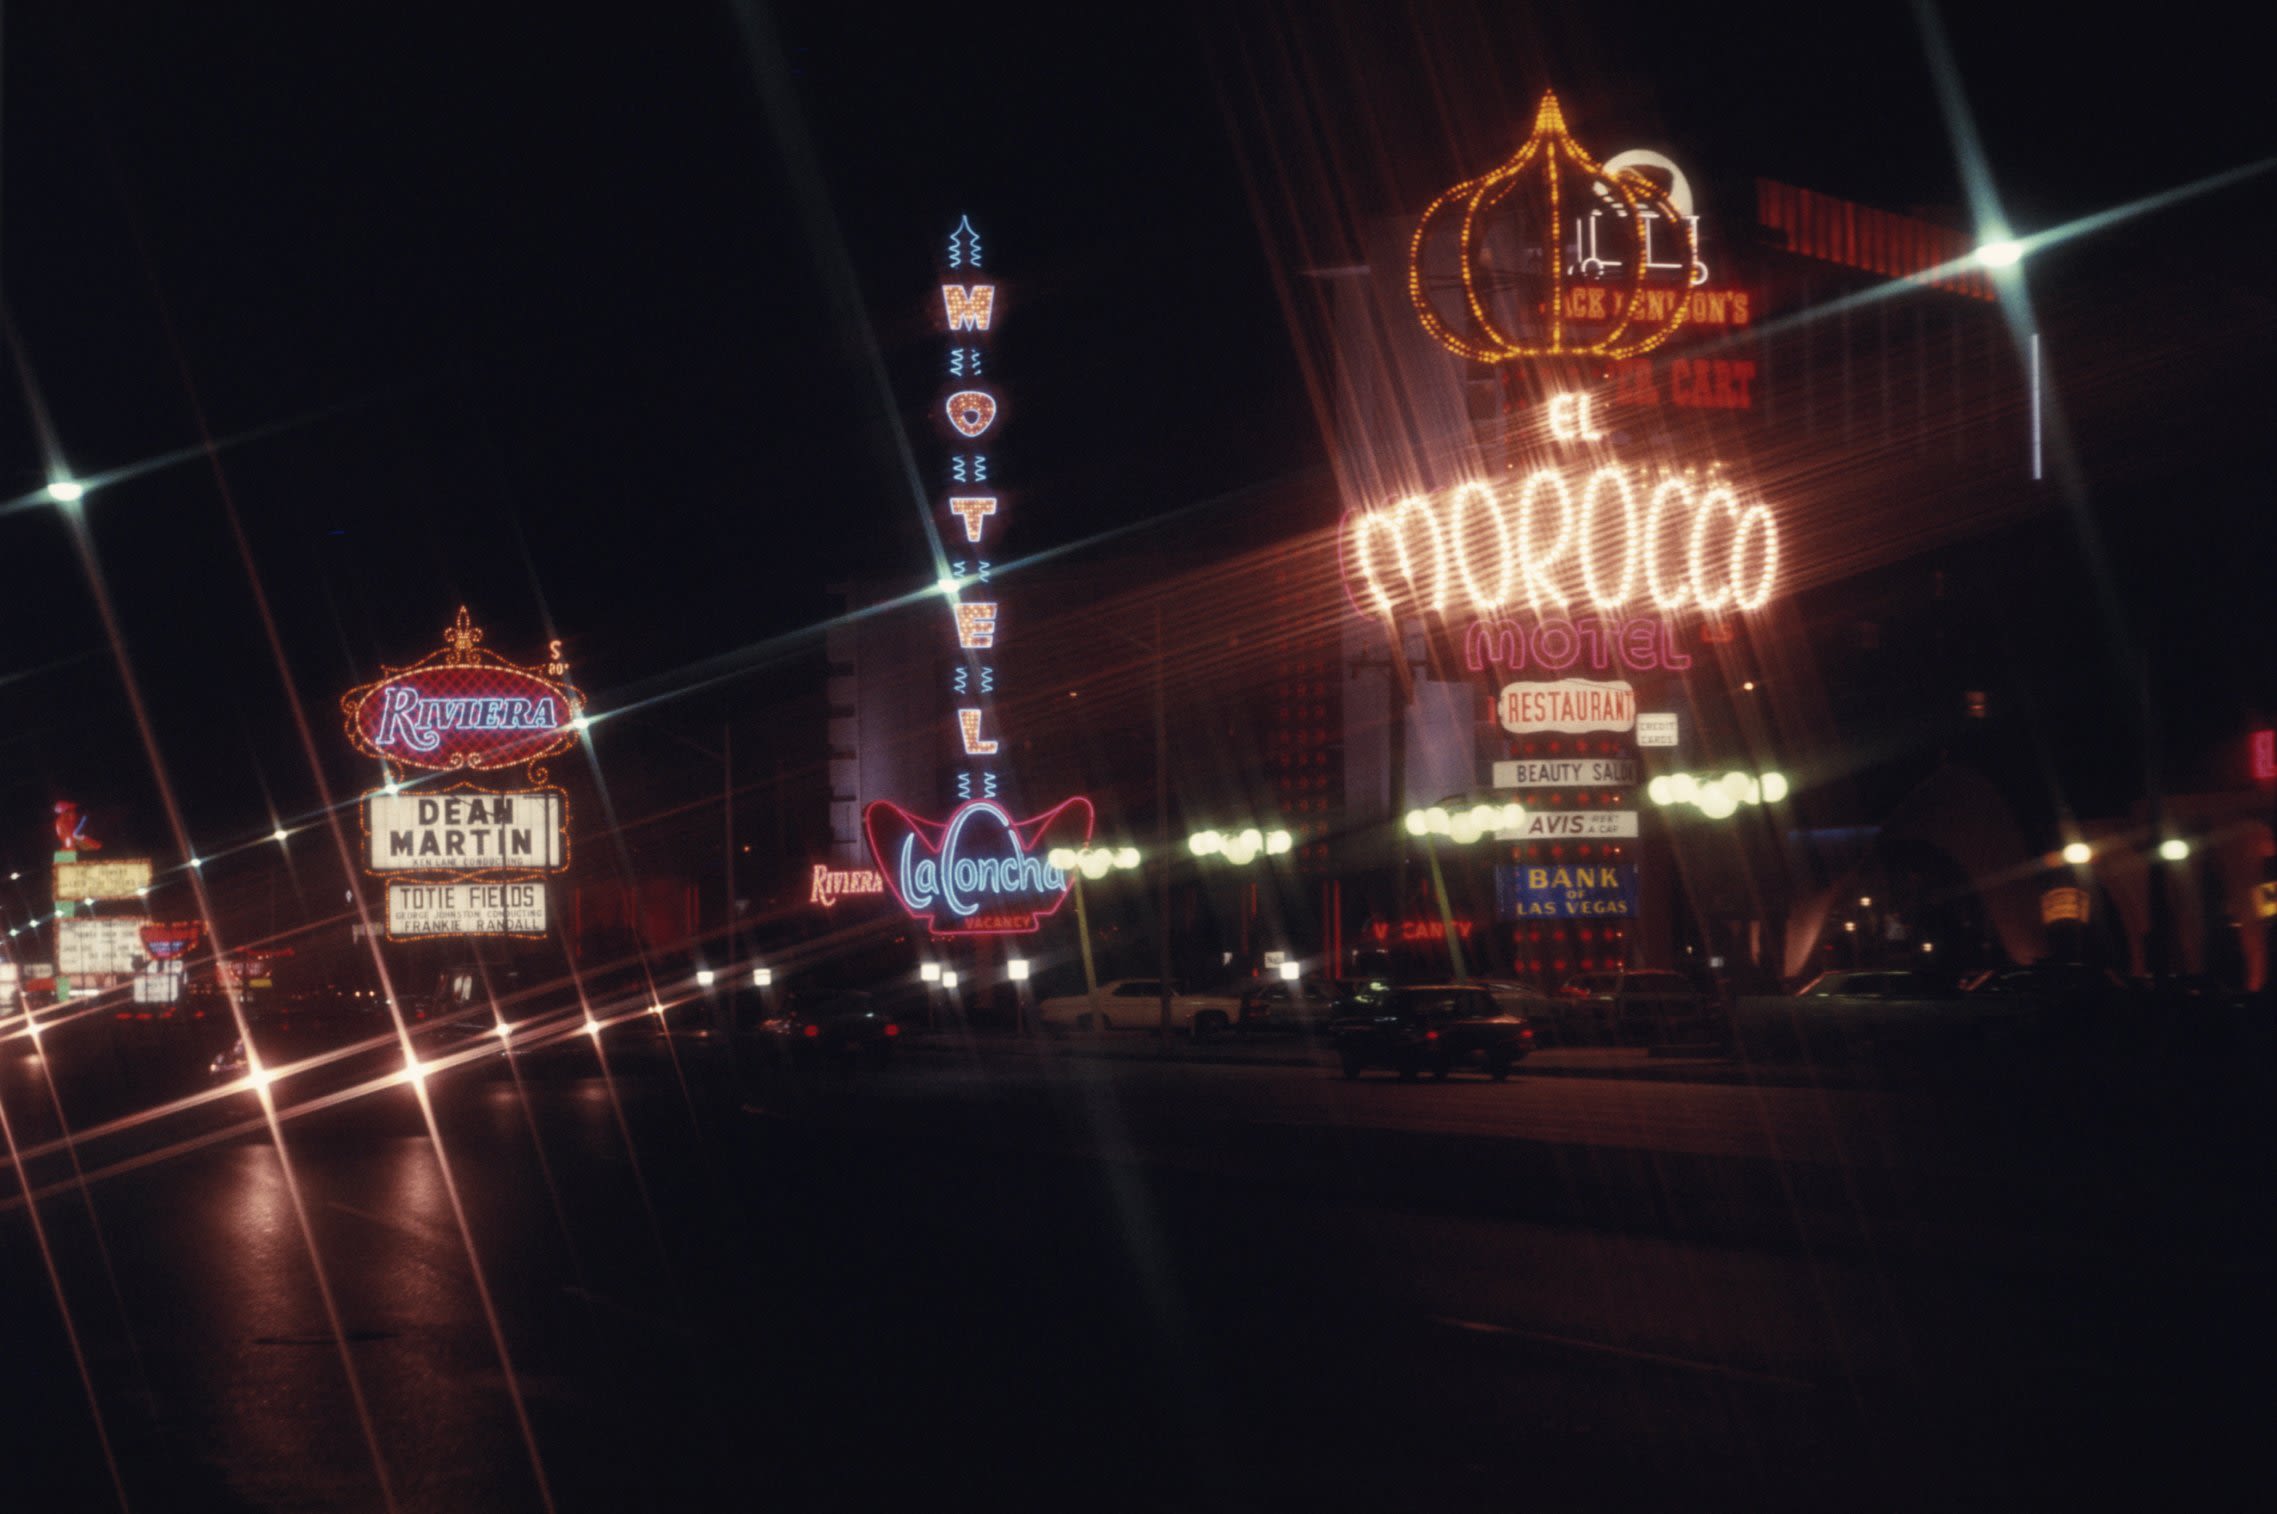 Las Vegas History: The Riviera •